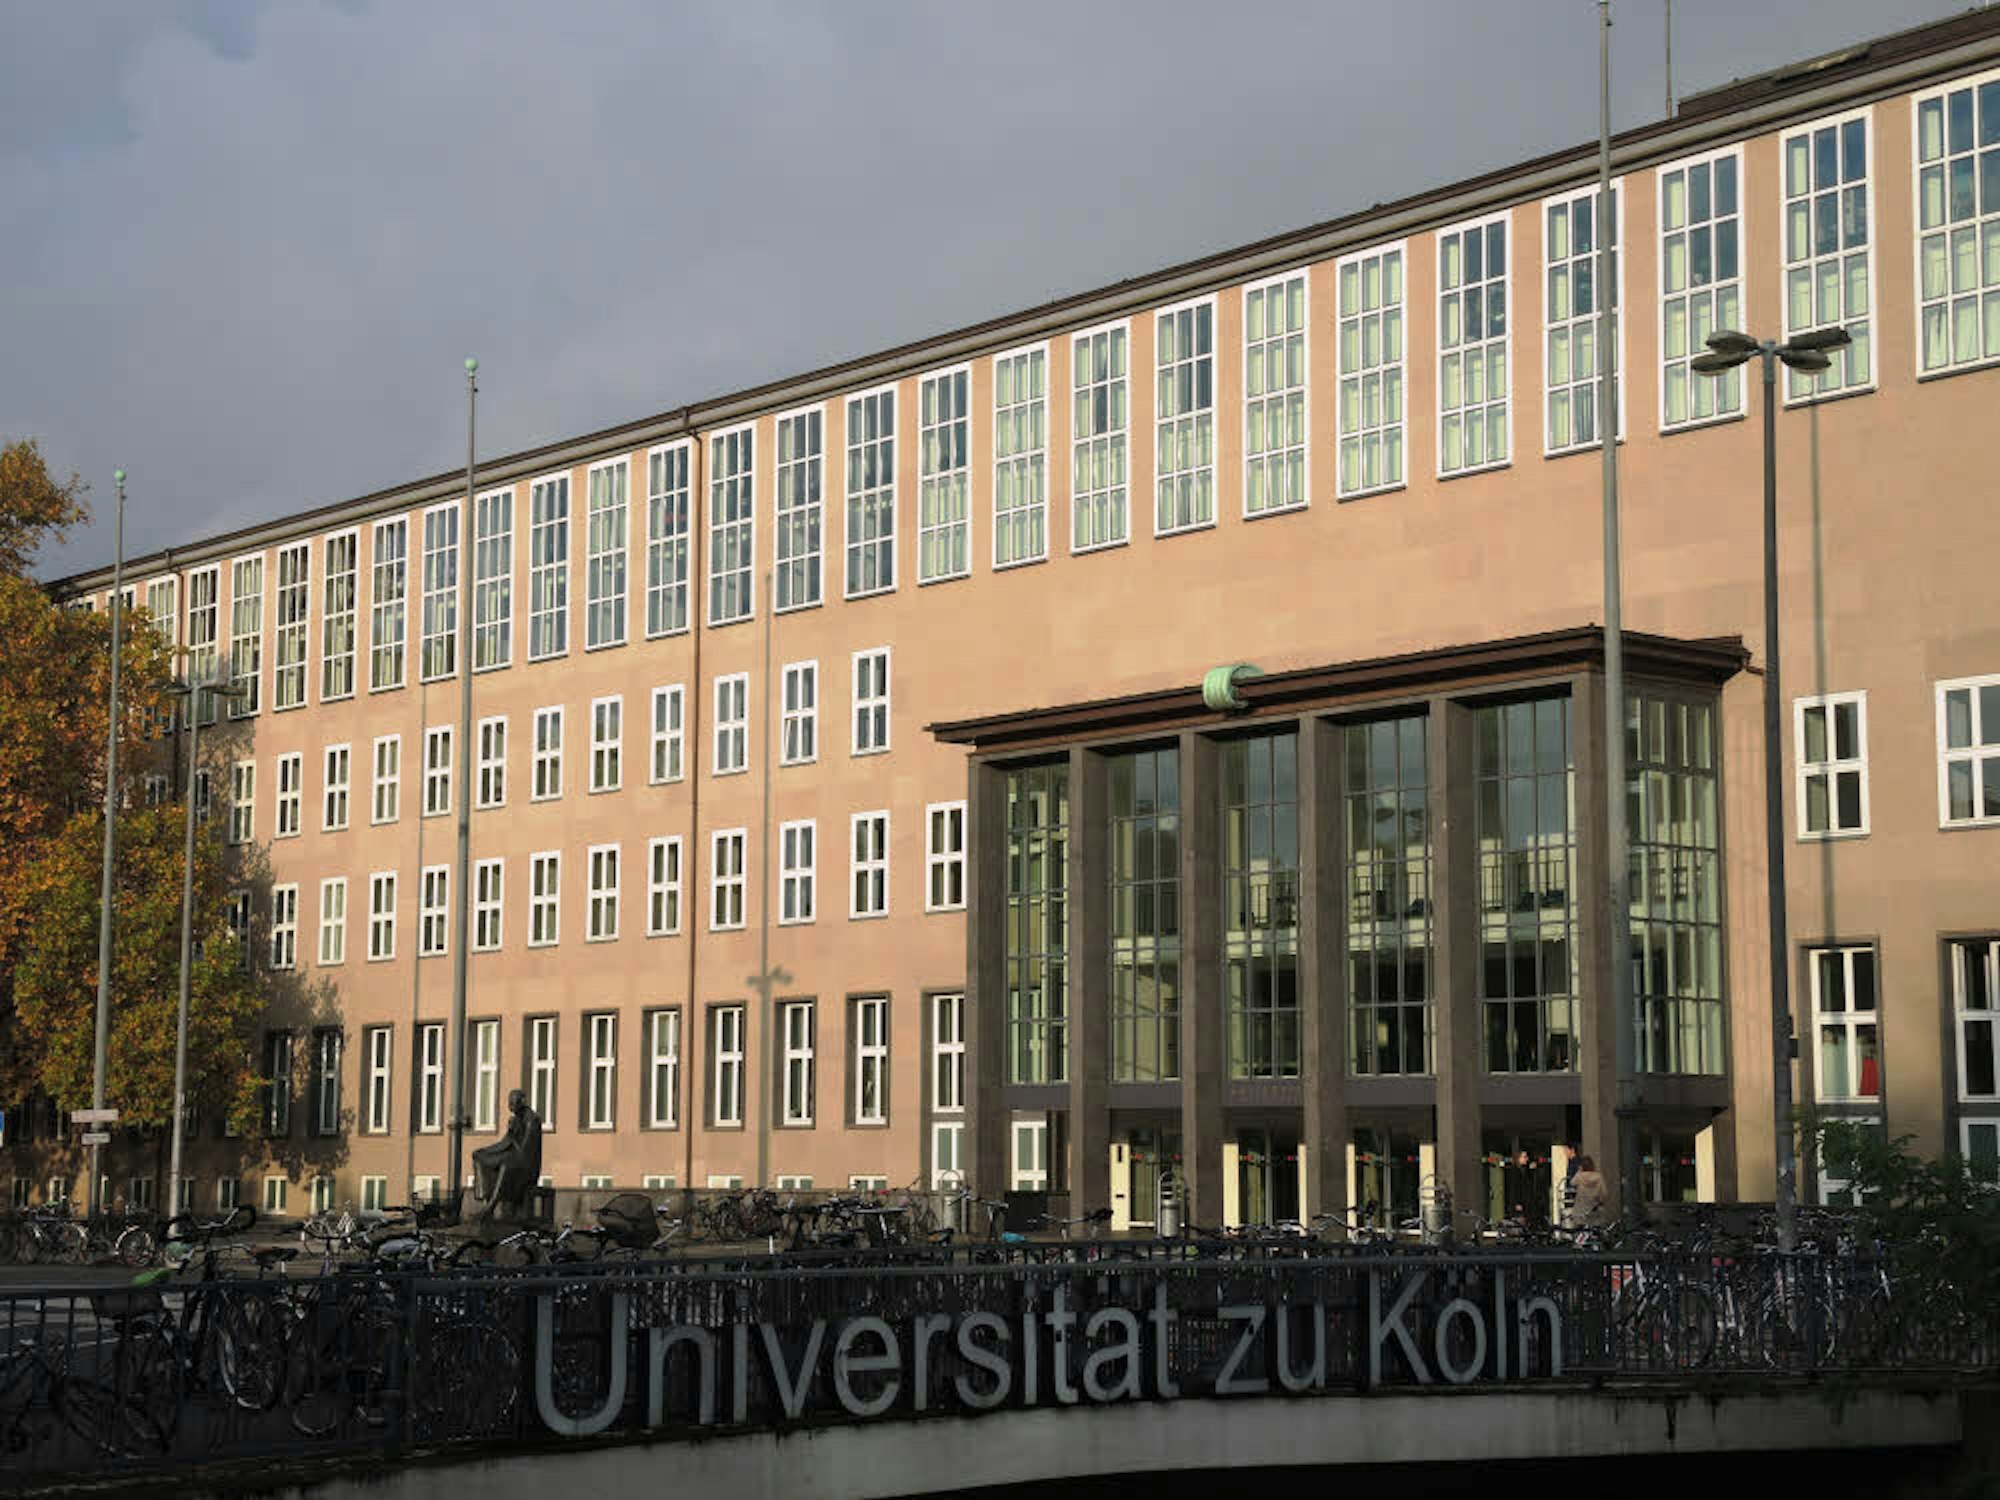 Das Uni-Hauptgebäude